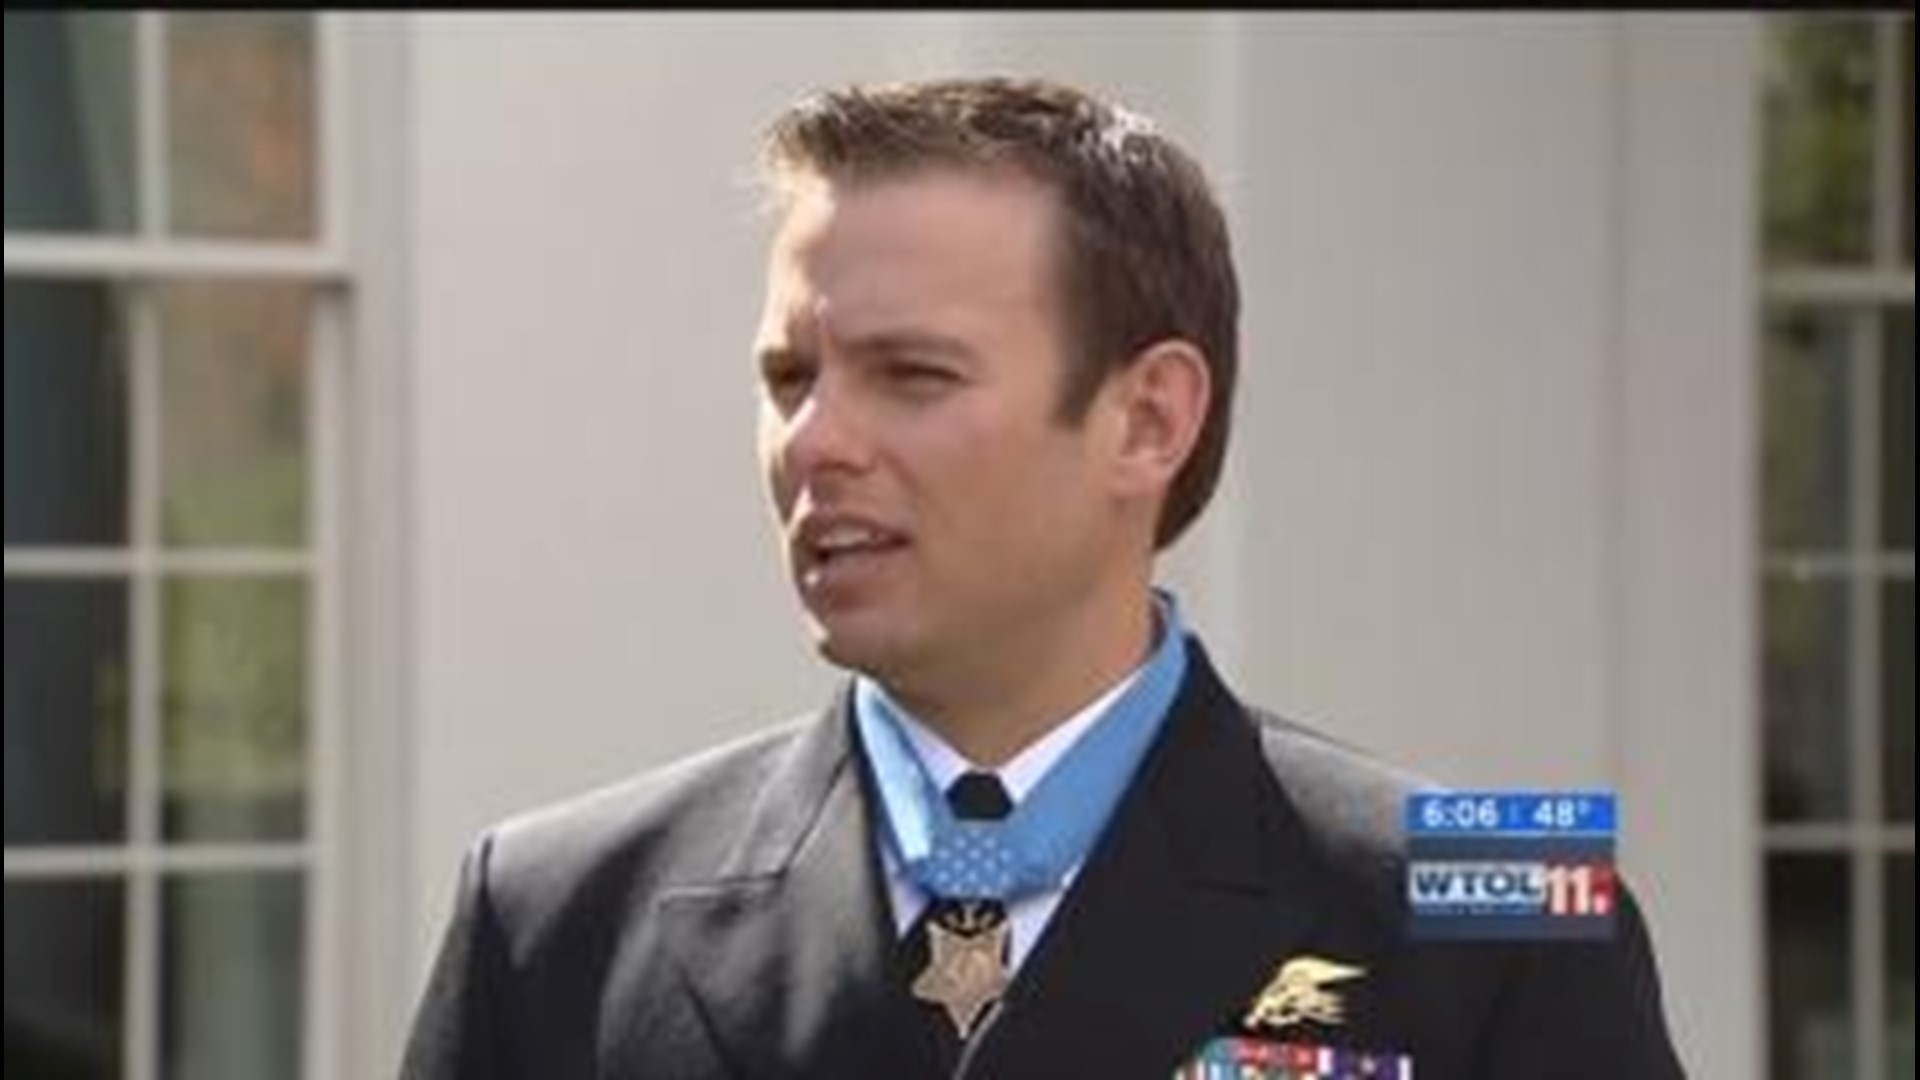 Toledo-born Edward Byers Jr. awarded Medal of Honor